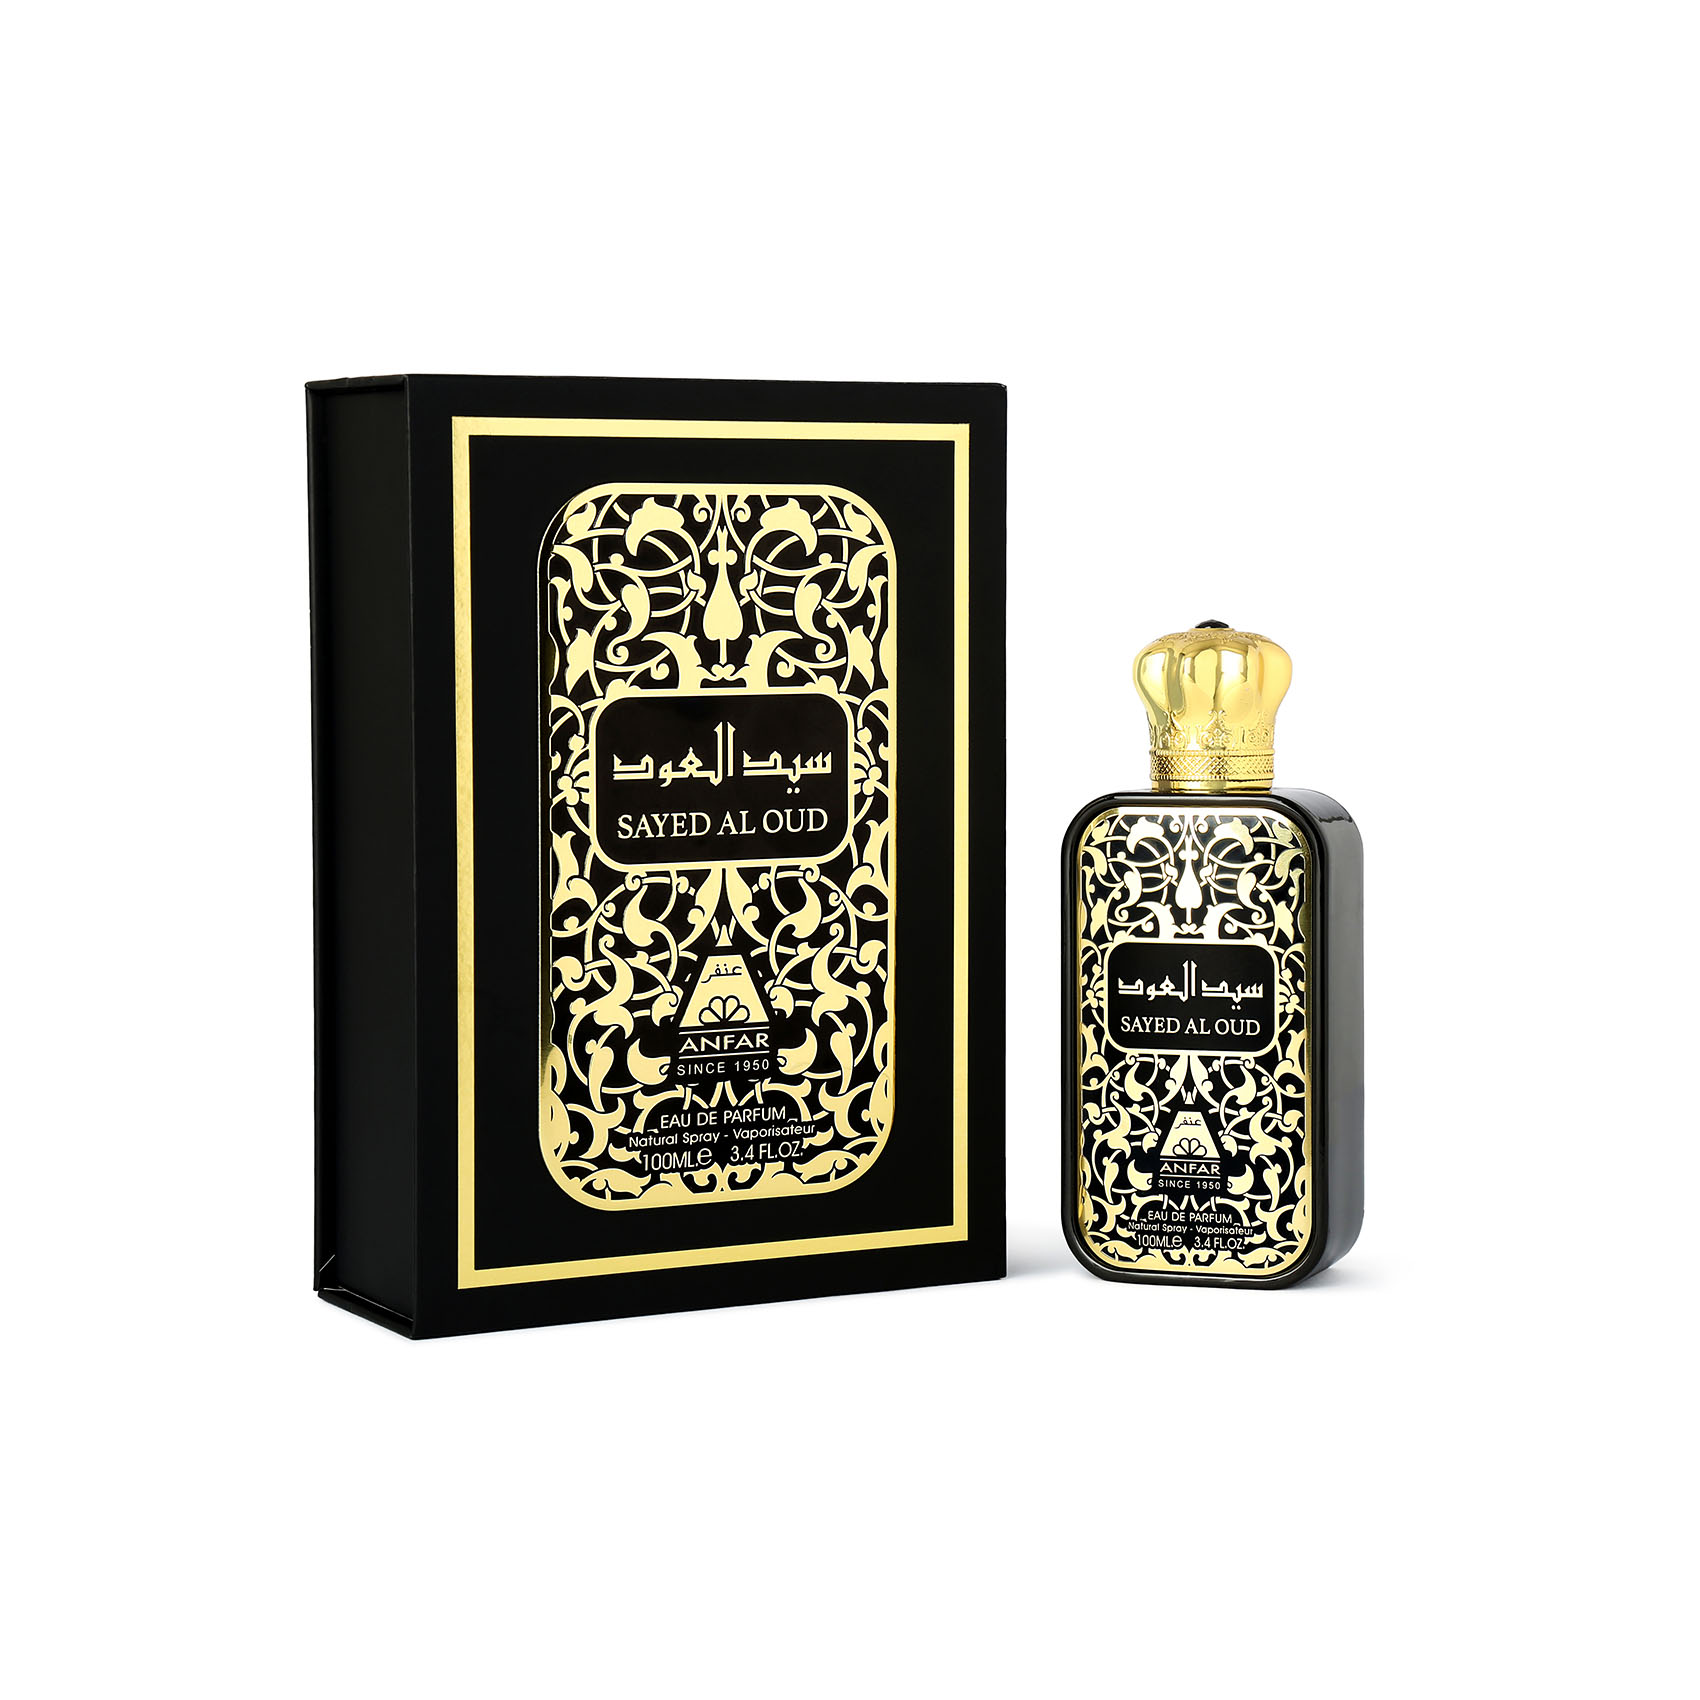 Sayed Al Oud Edp 100 ml Perfume For Men & Women By Anfar